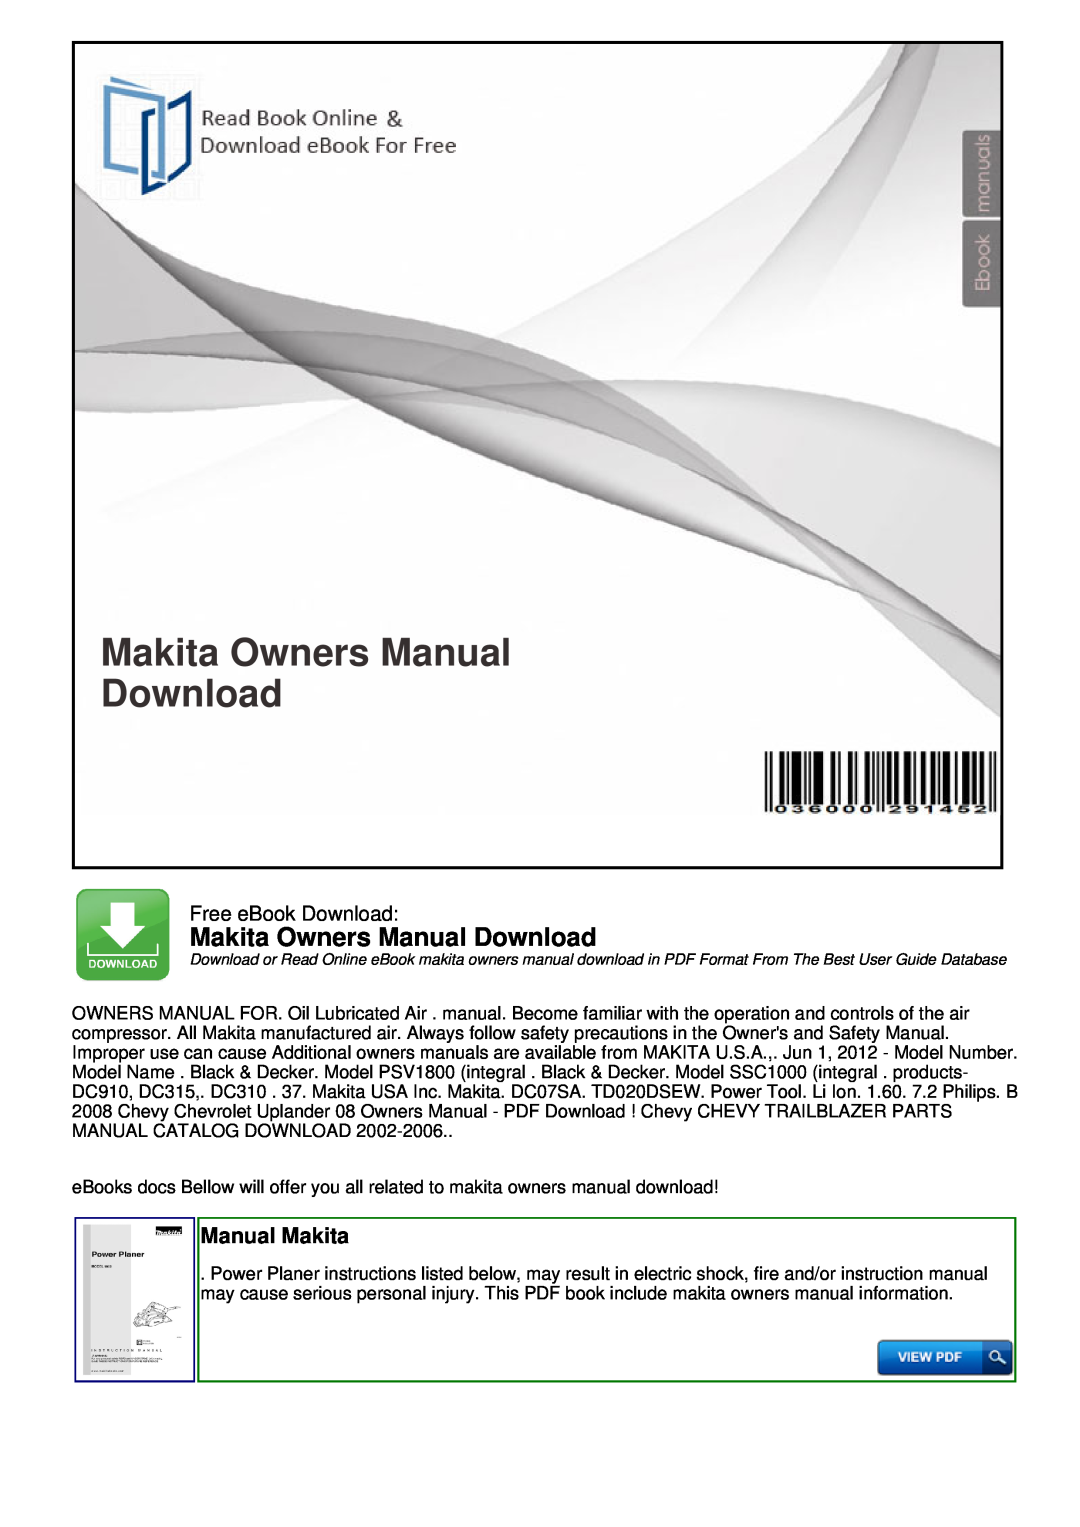 Makita DC07SA manual 